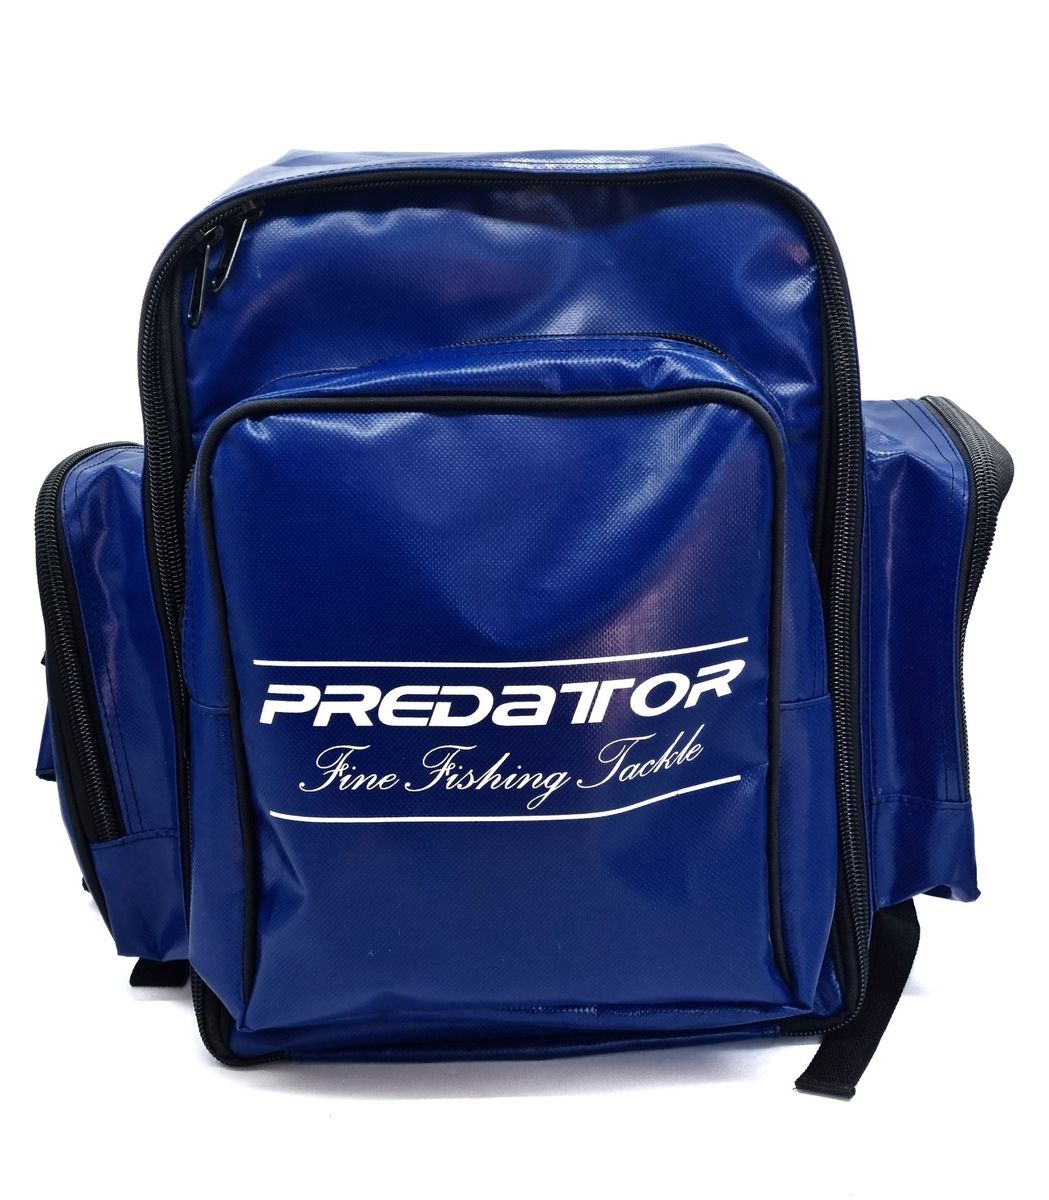 Predator Surf Fishing Bag Blue, Shop Today. Get it Tomorrow!